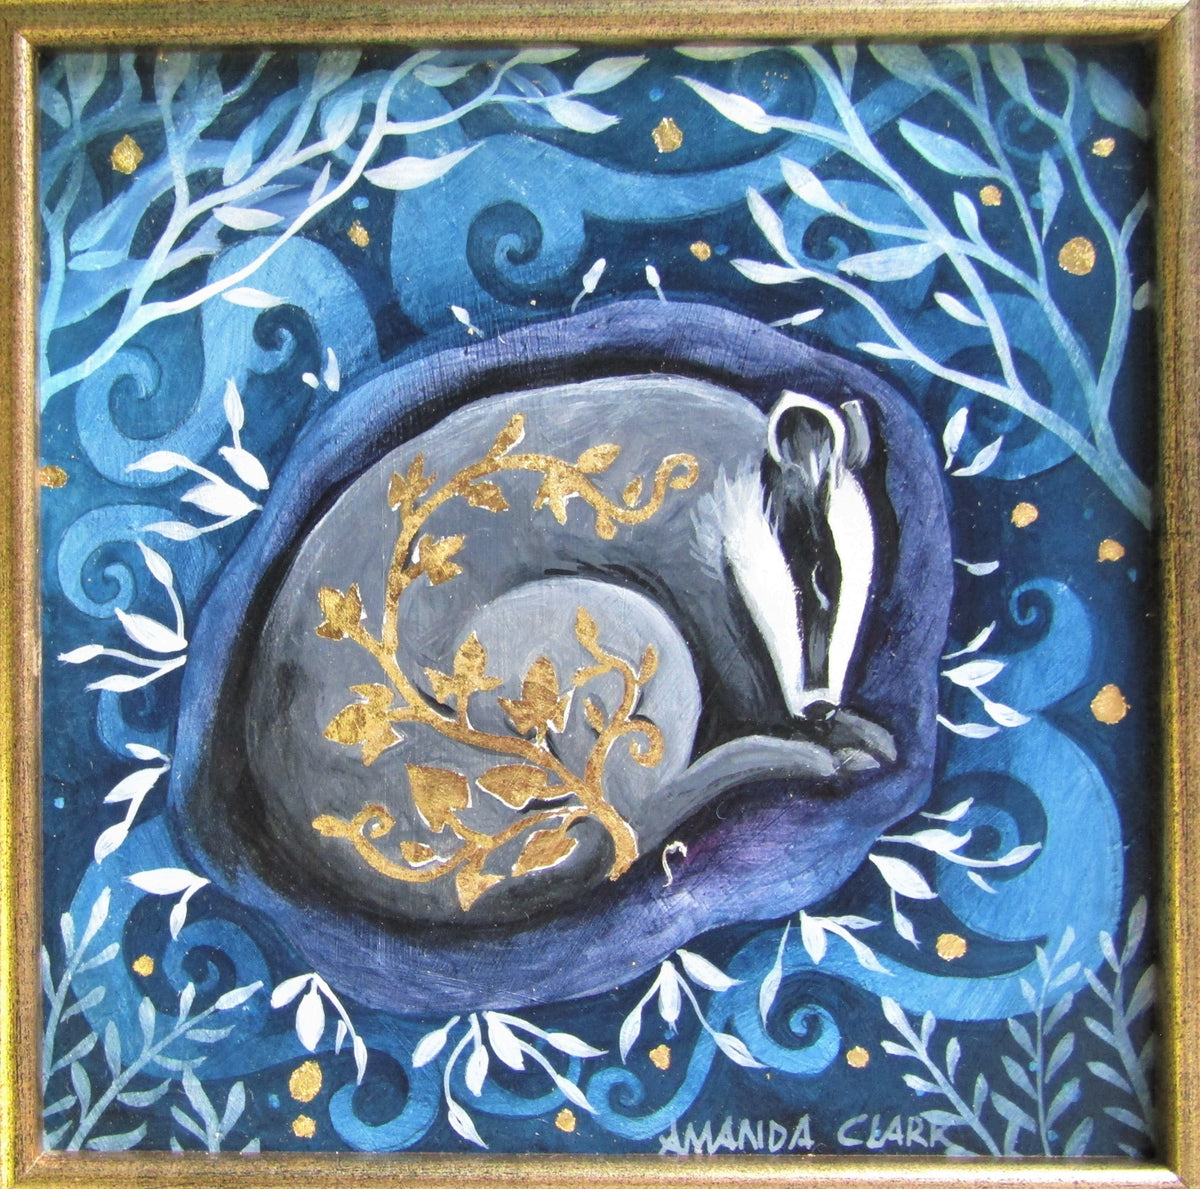 The Sleeping Badger by Amanda Clark